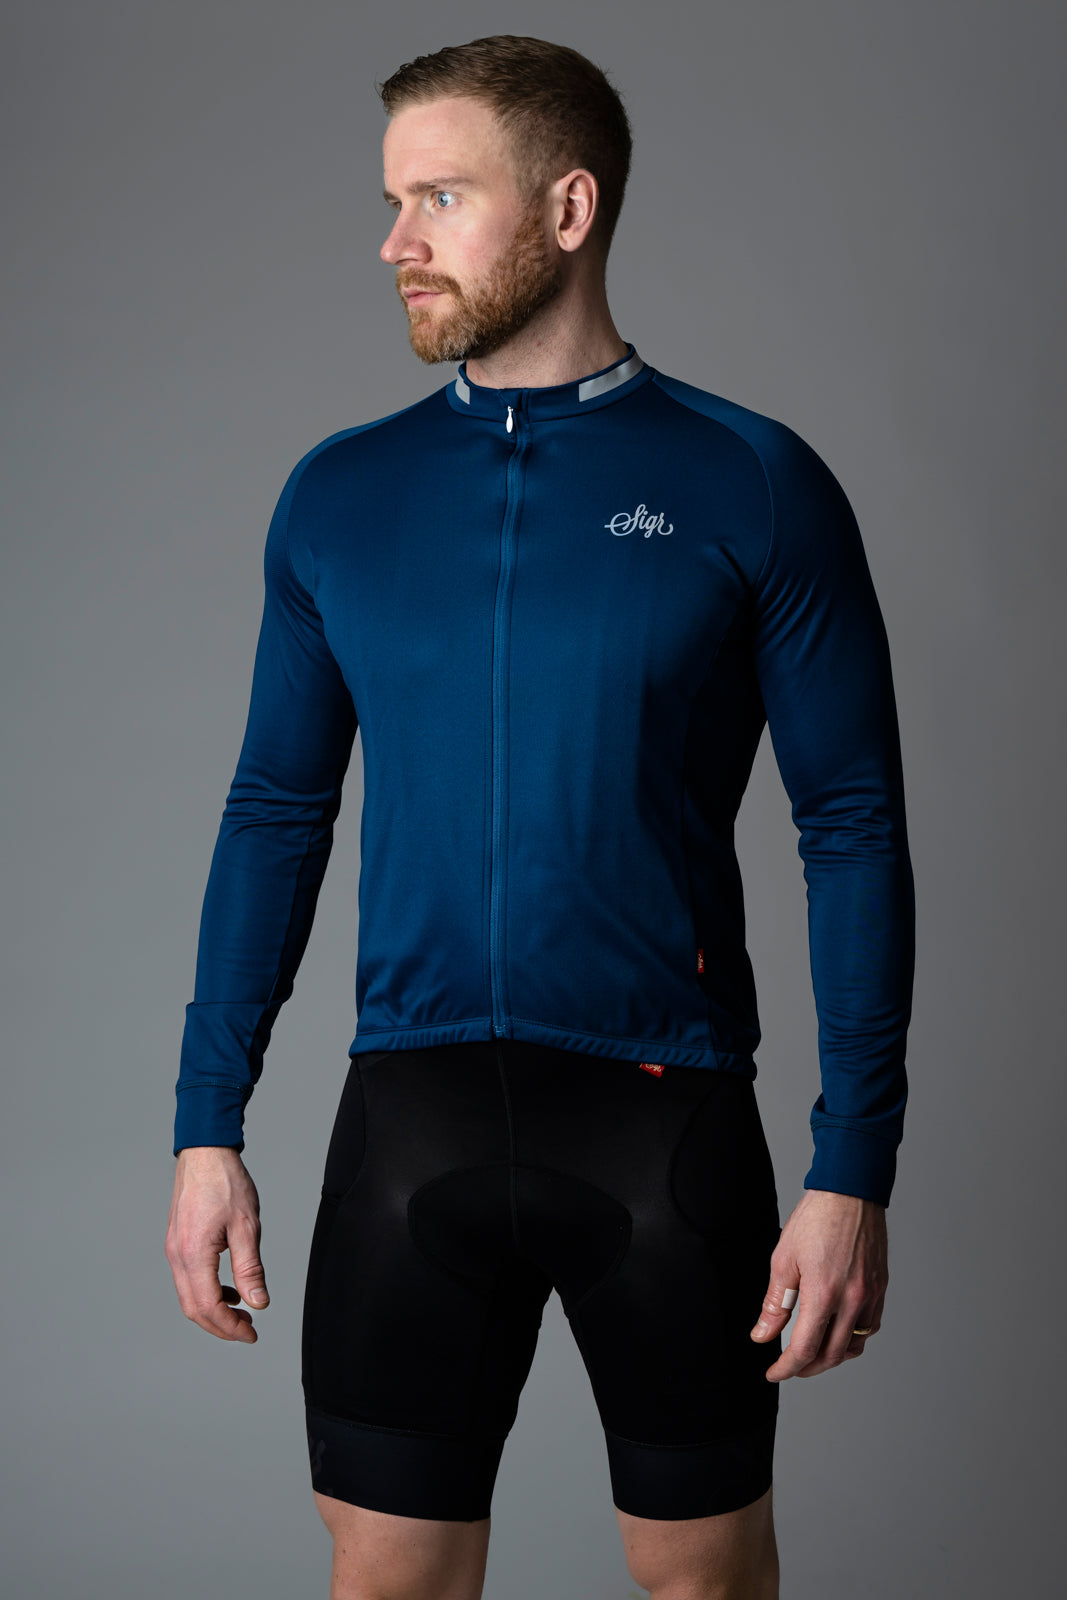 Krokus Blue - Warmer Long Sleeved Jersey for Men